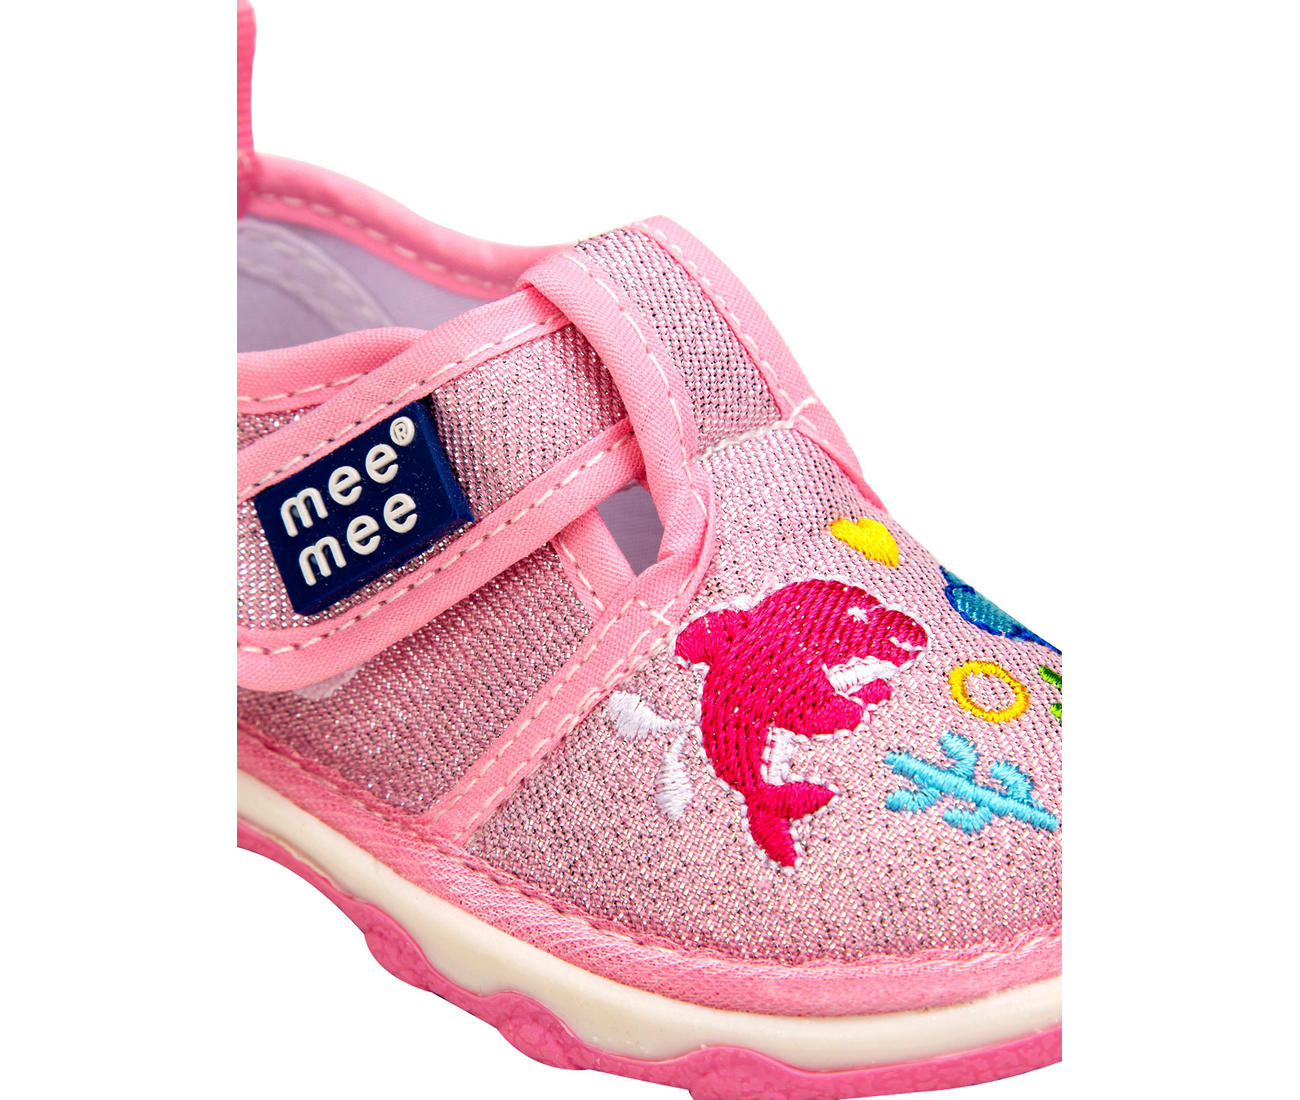 baby shoes with chu chu sound